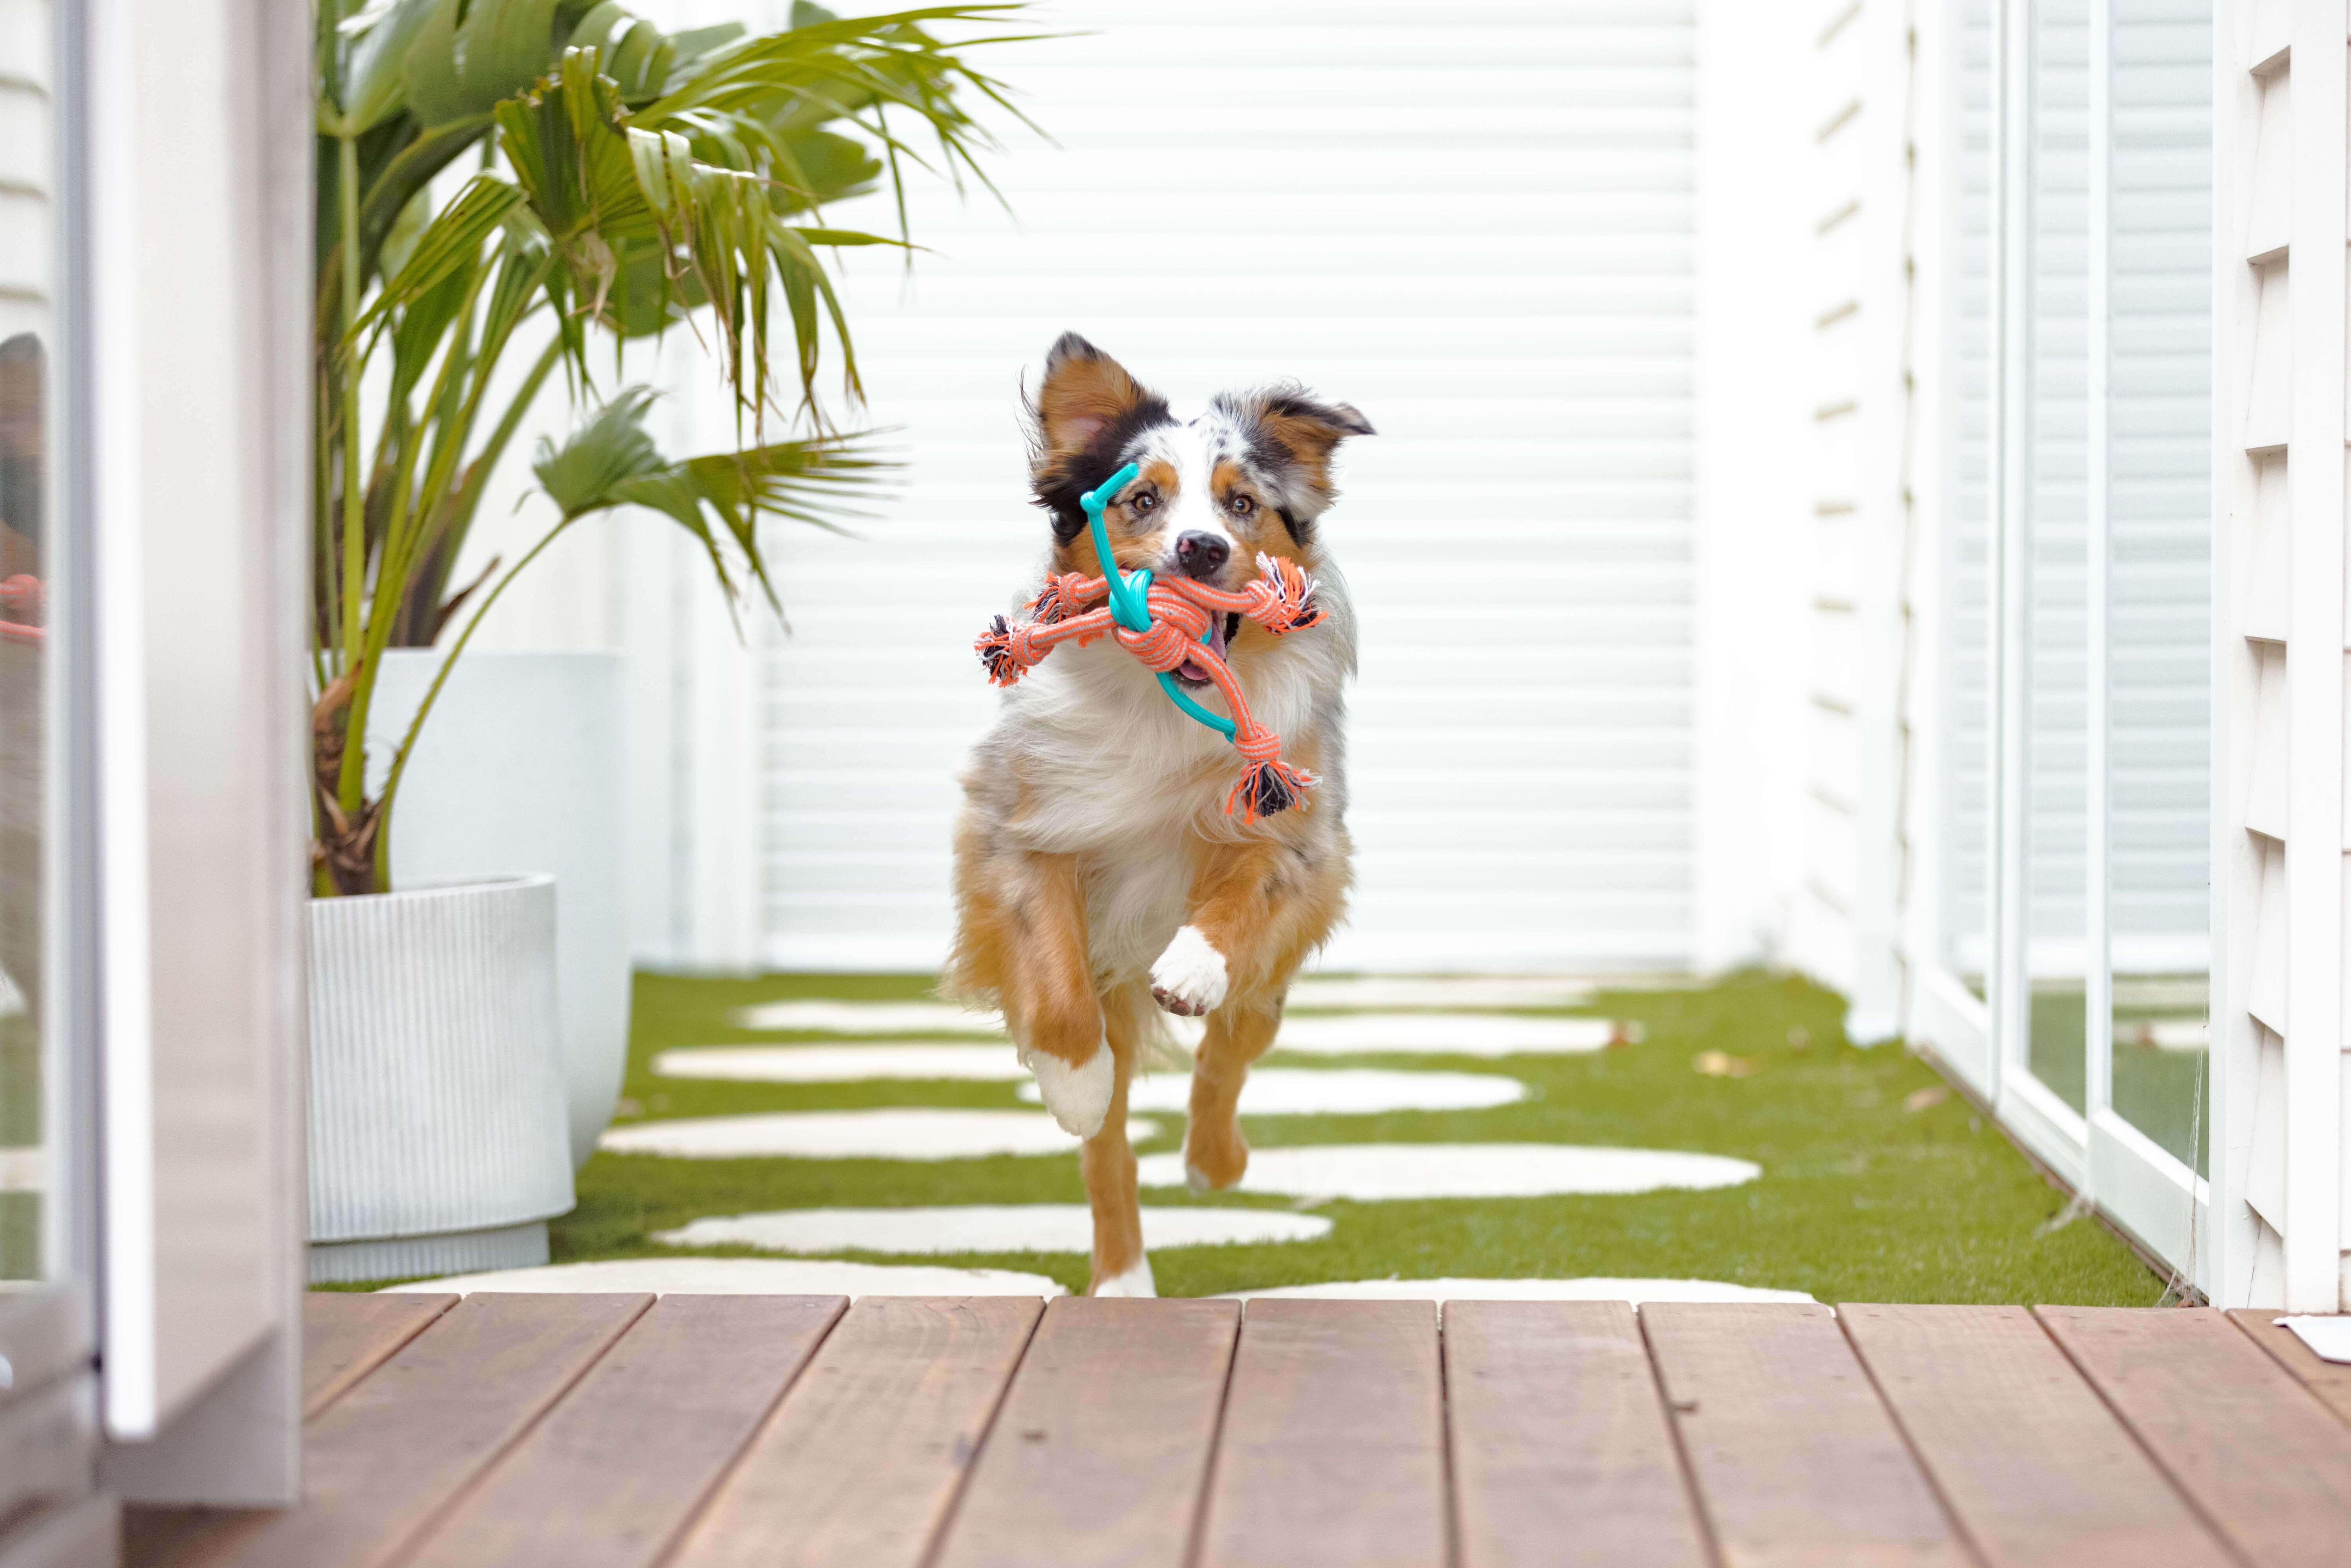 Happy Tails Large Bone Print Dog Harness - Bunnings Australia